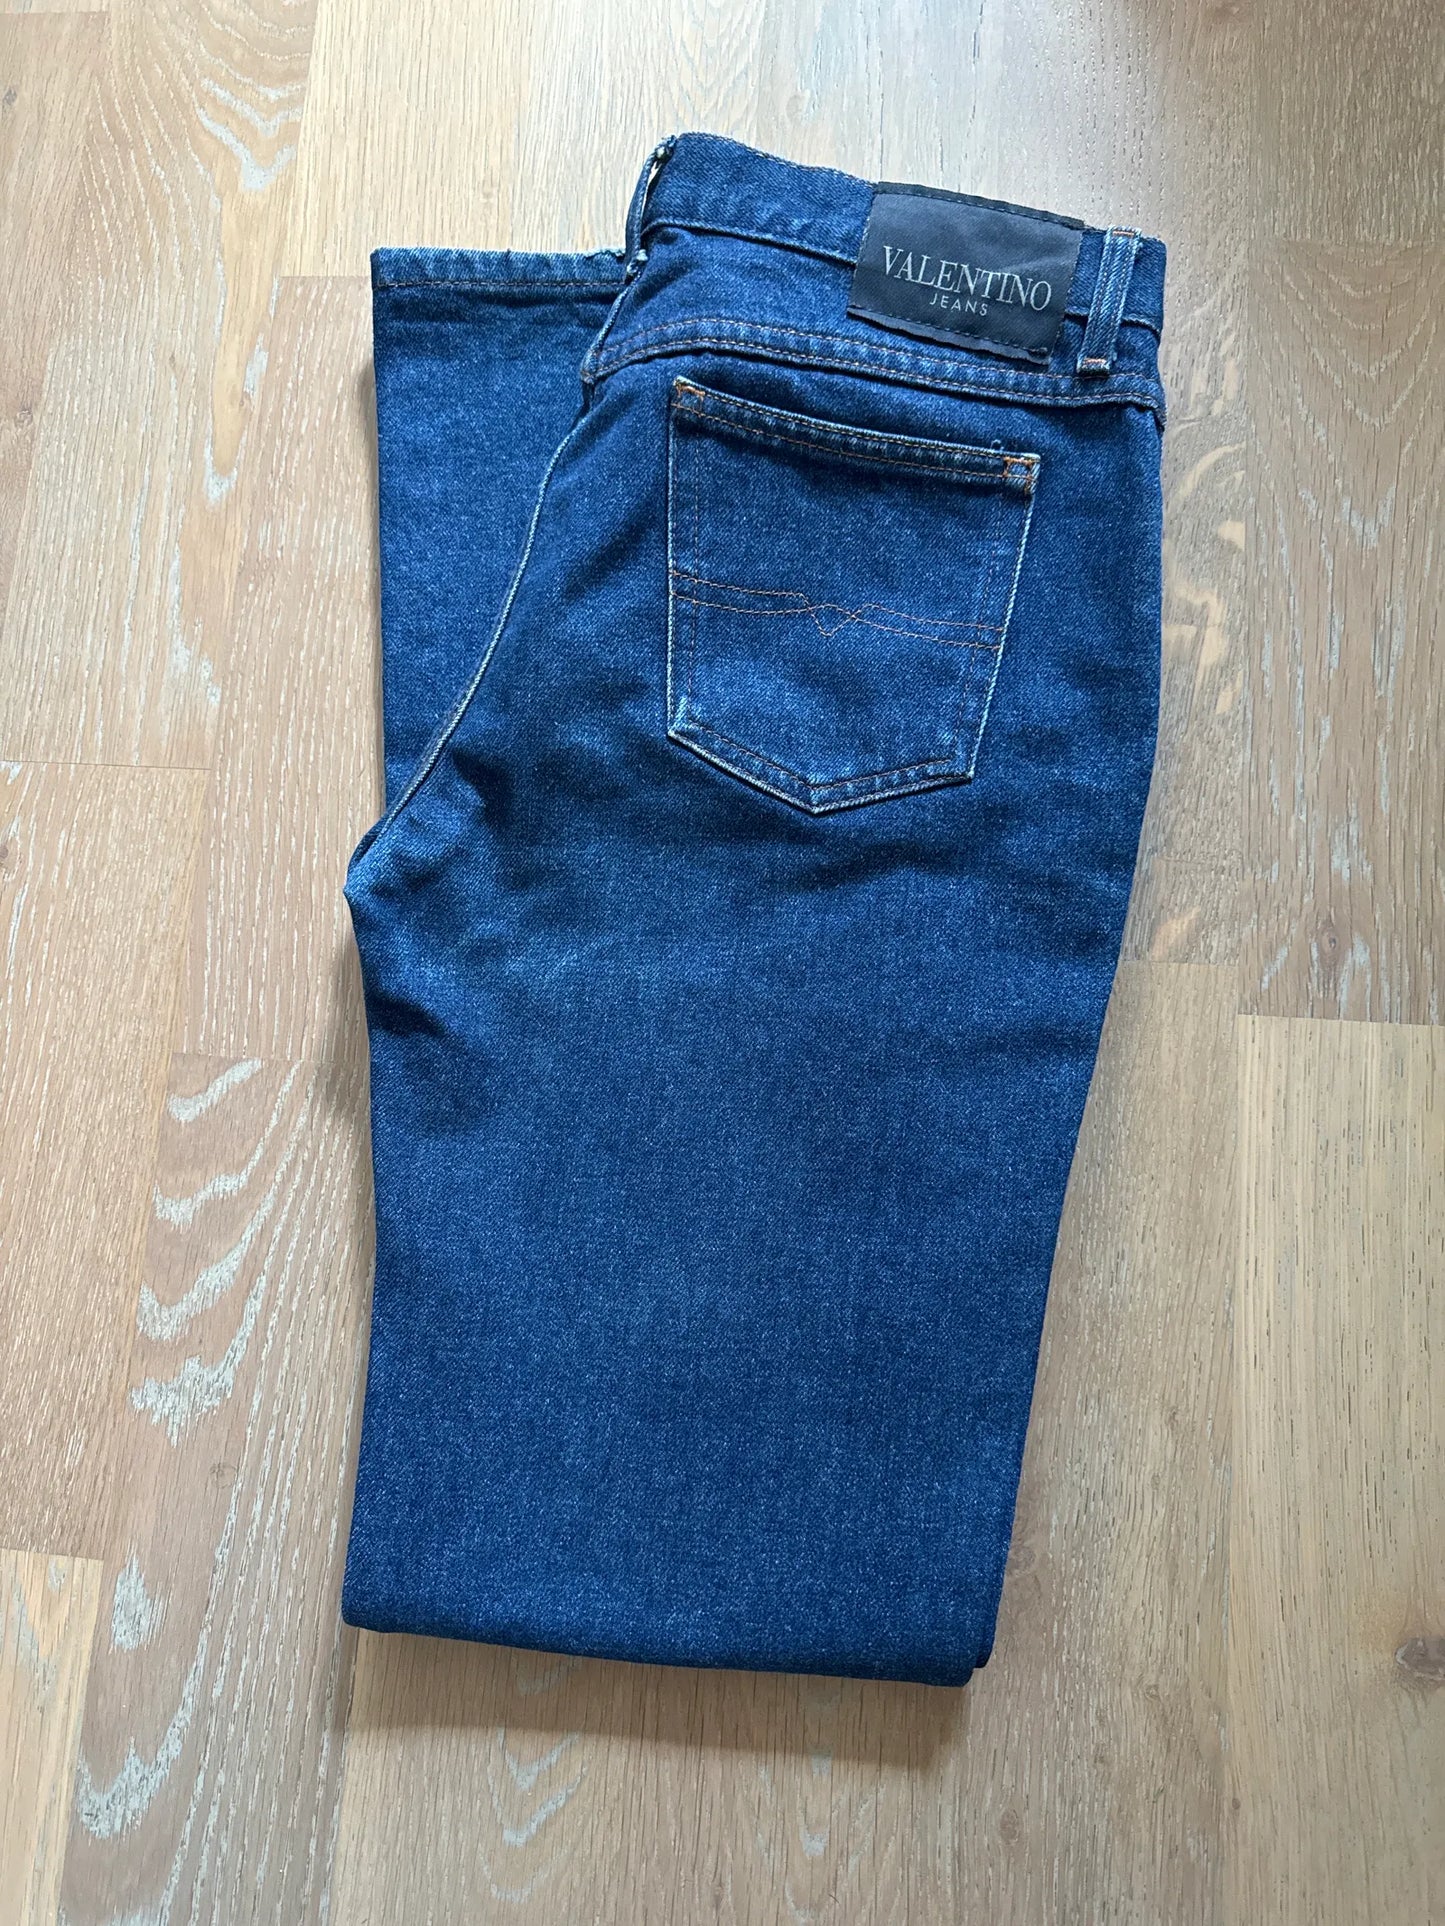 Valentino-jeans